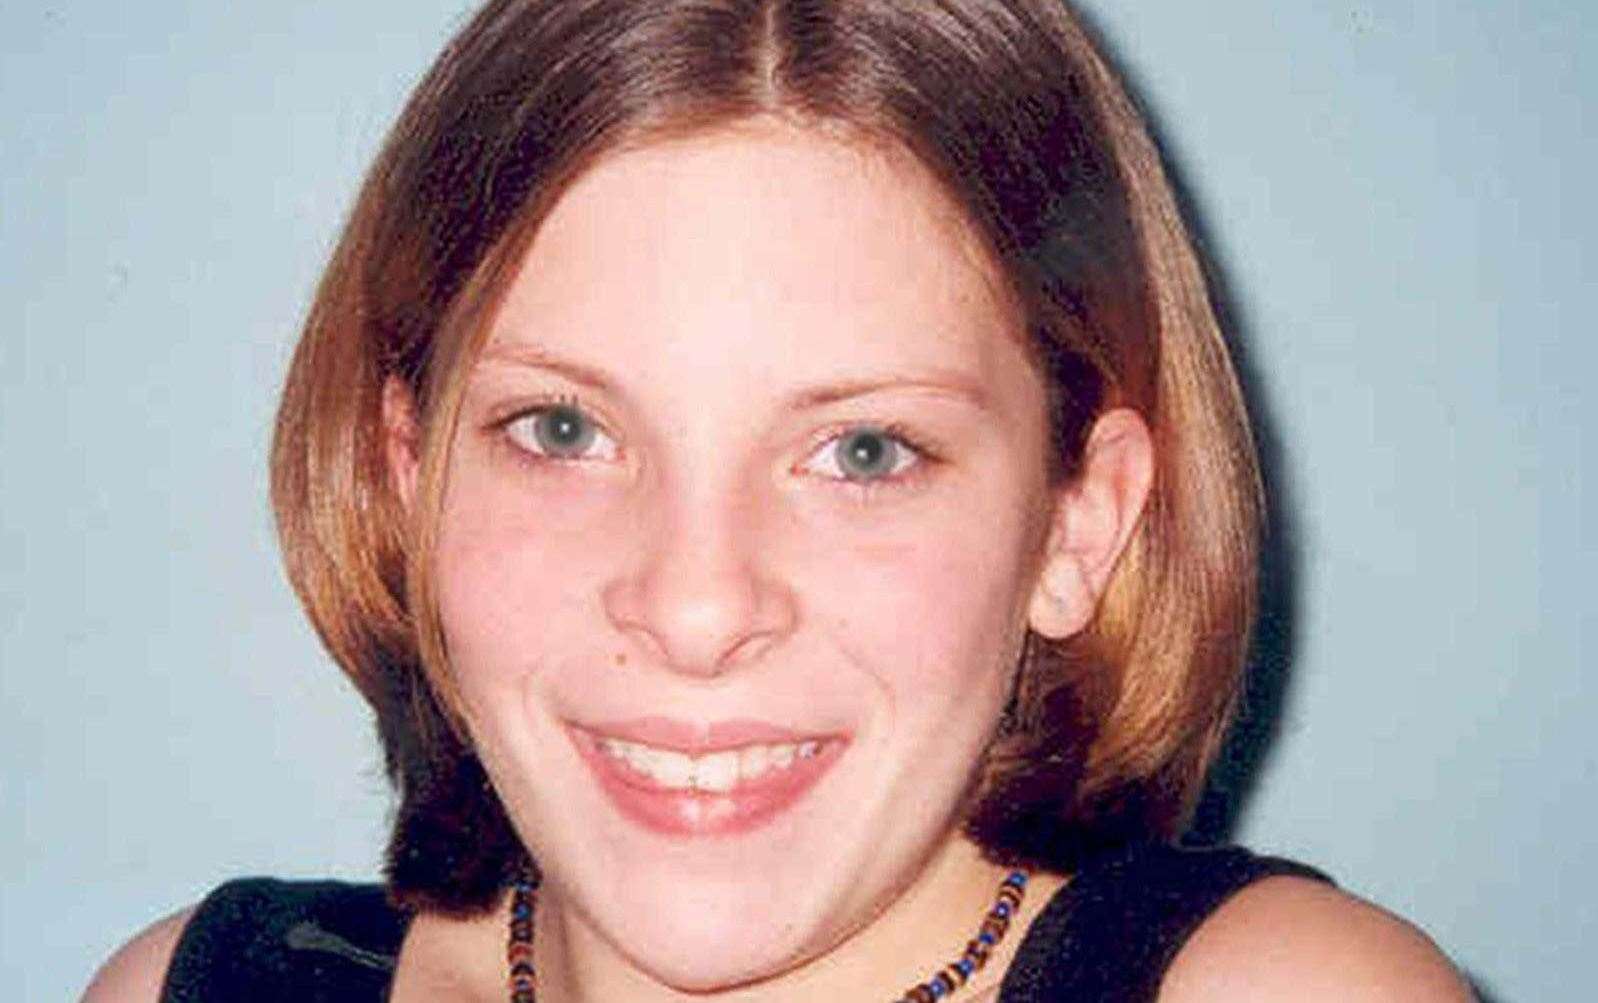 Bellfield has since admitted killing Surrey schoolgirl Milly Dowler